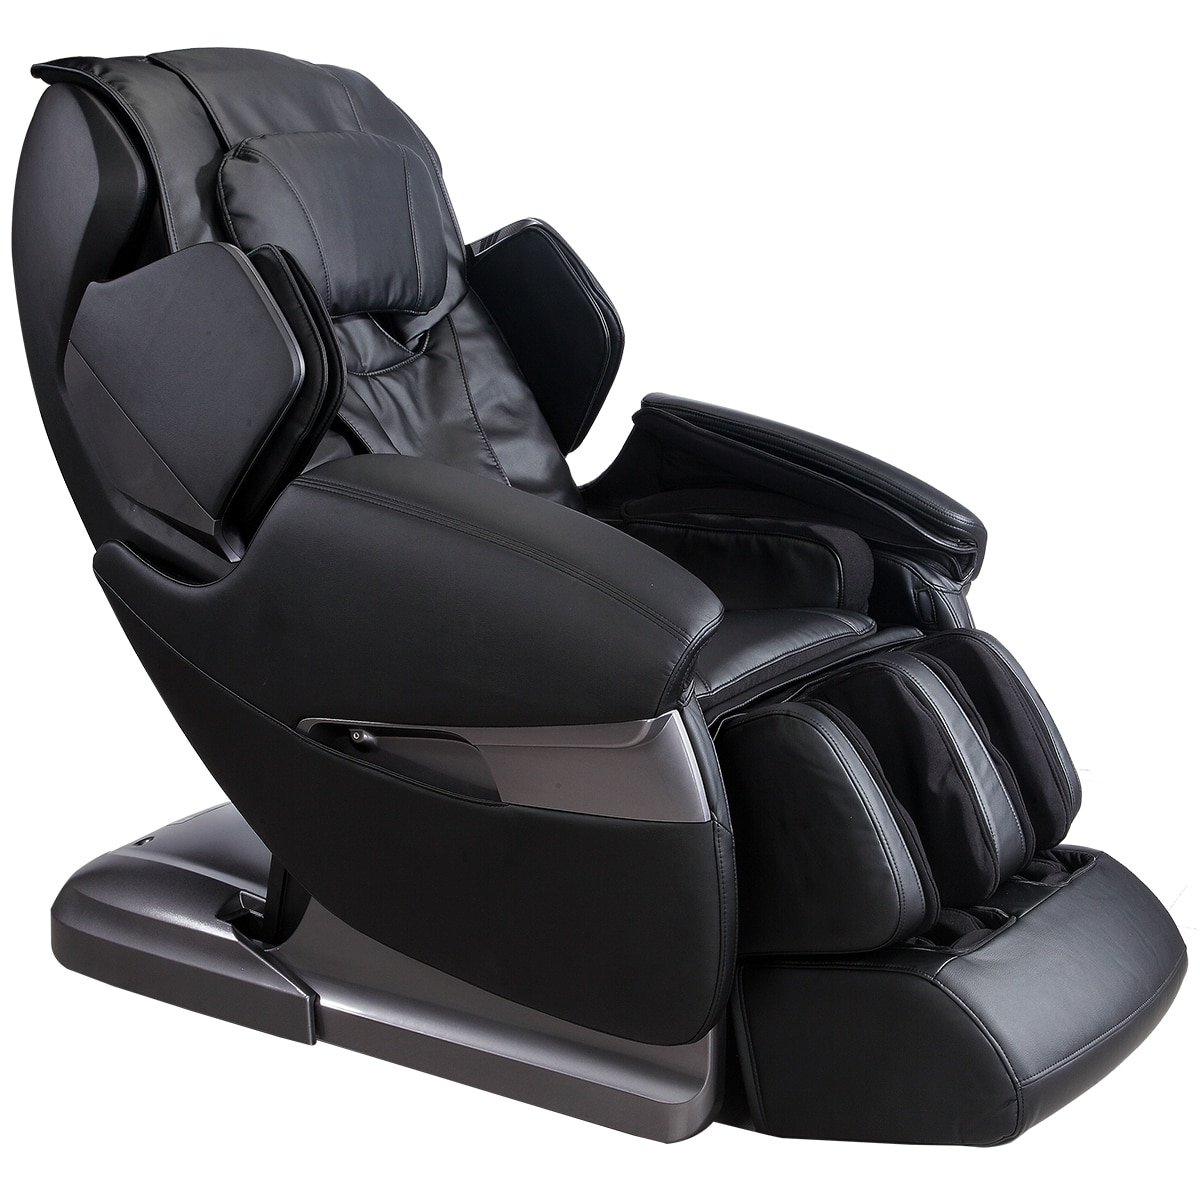 Masseuse Massage Chairs Platinum Health Massage Chair - Black